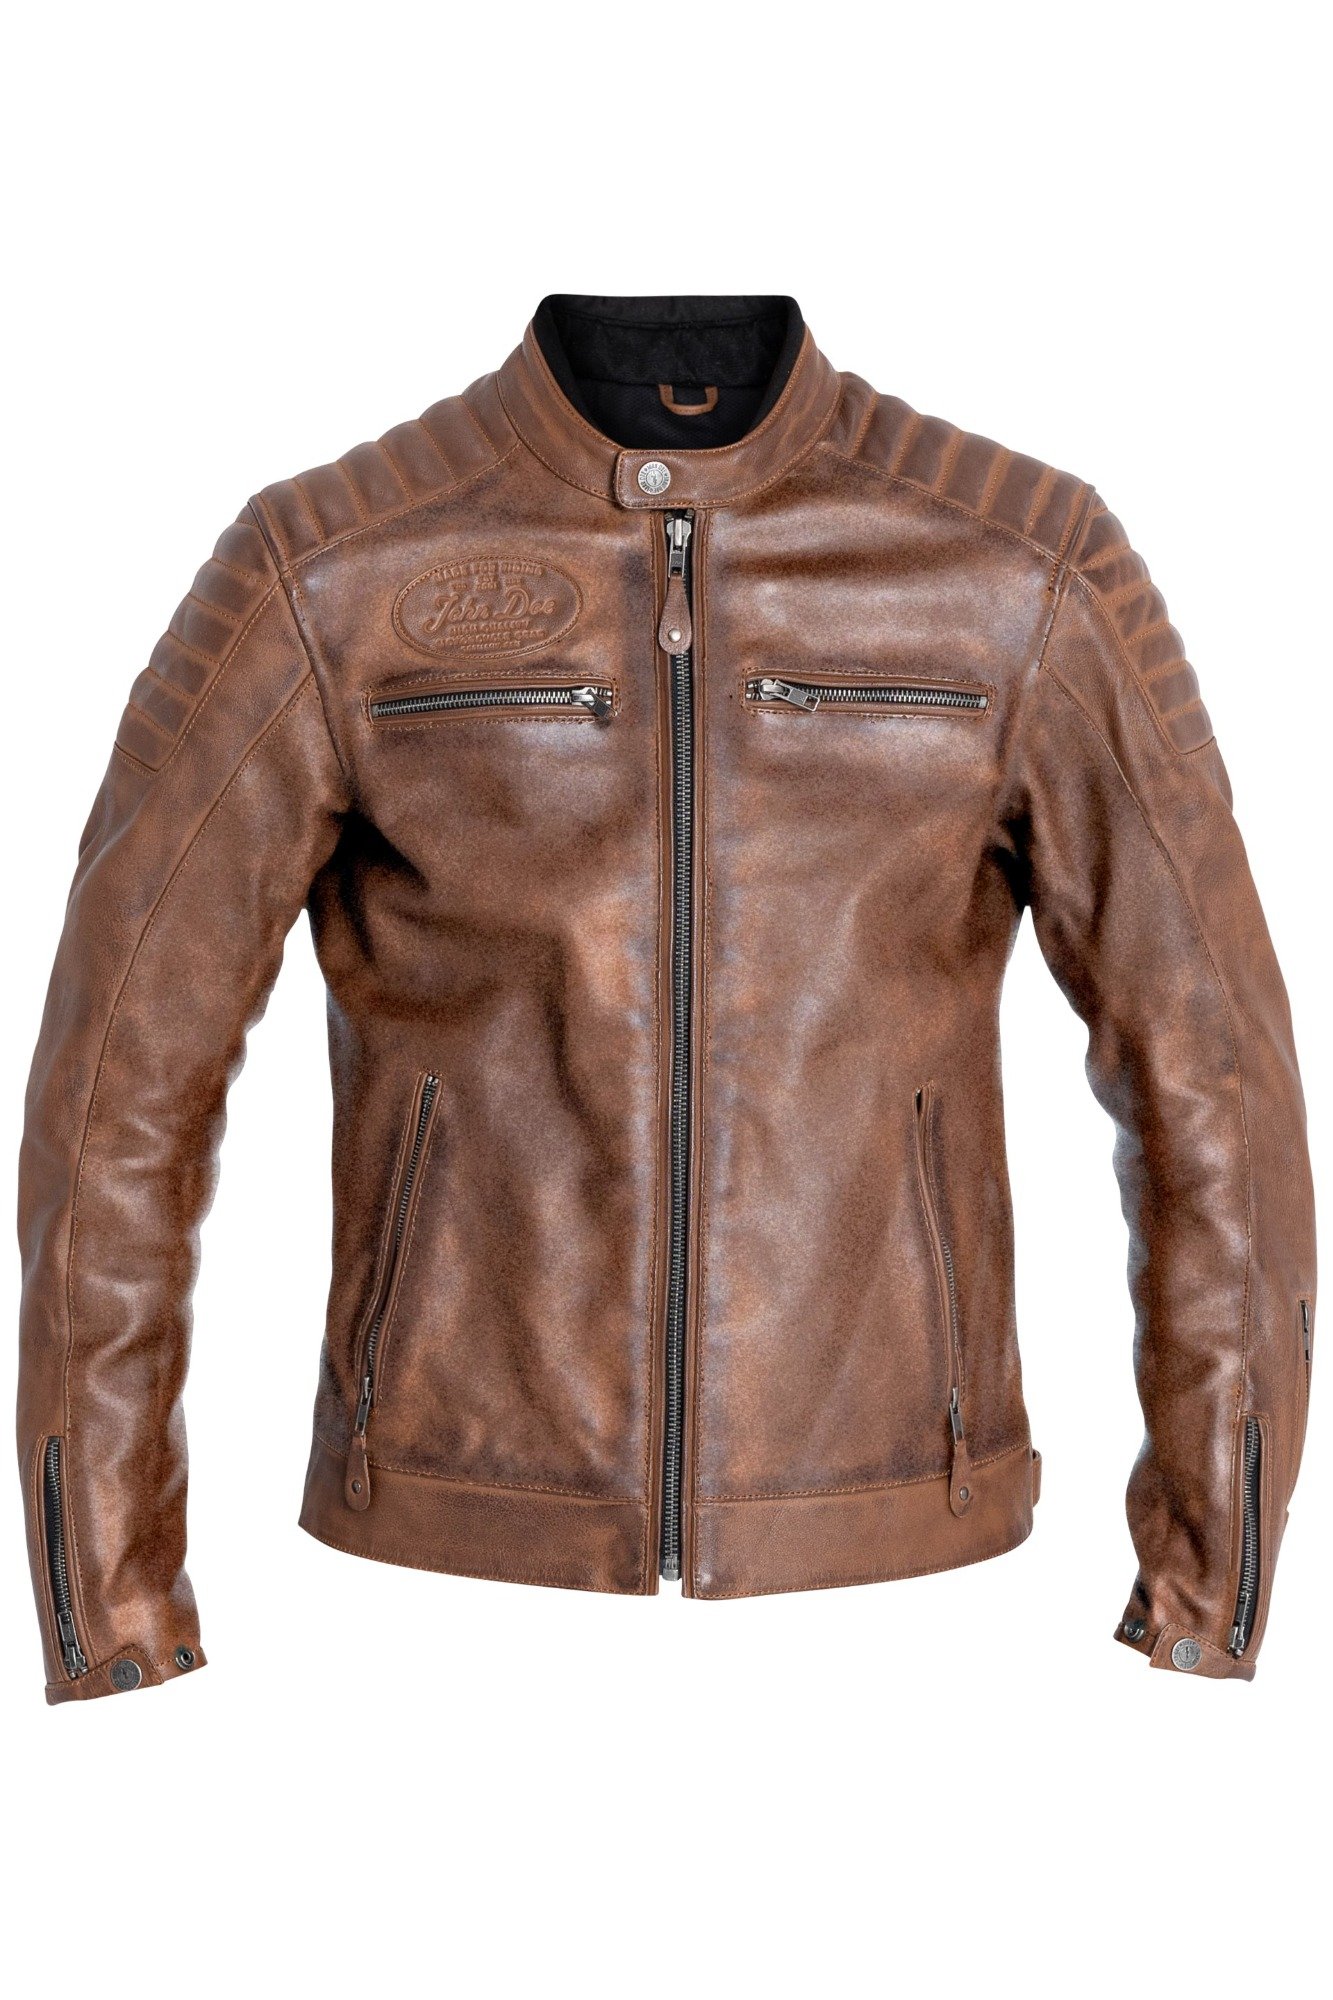 Image of John Doe Leather Dexter Jacket Brown Size L ID 4250553241863